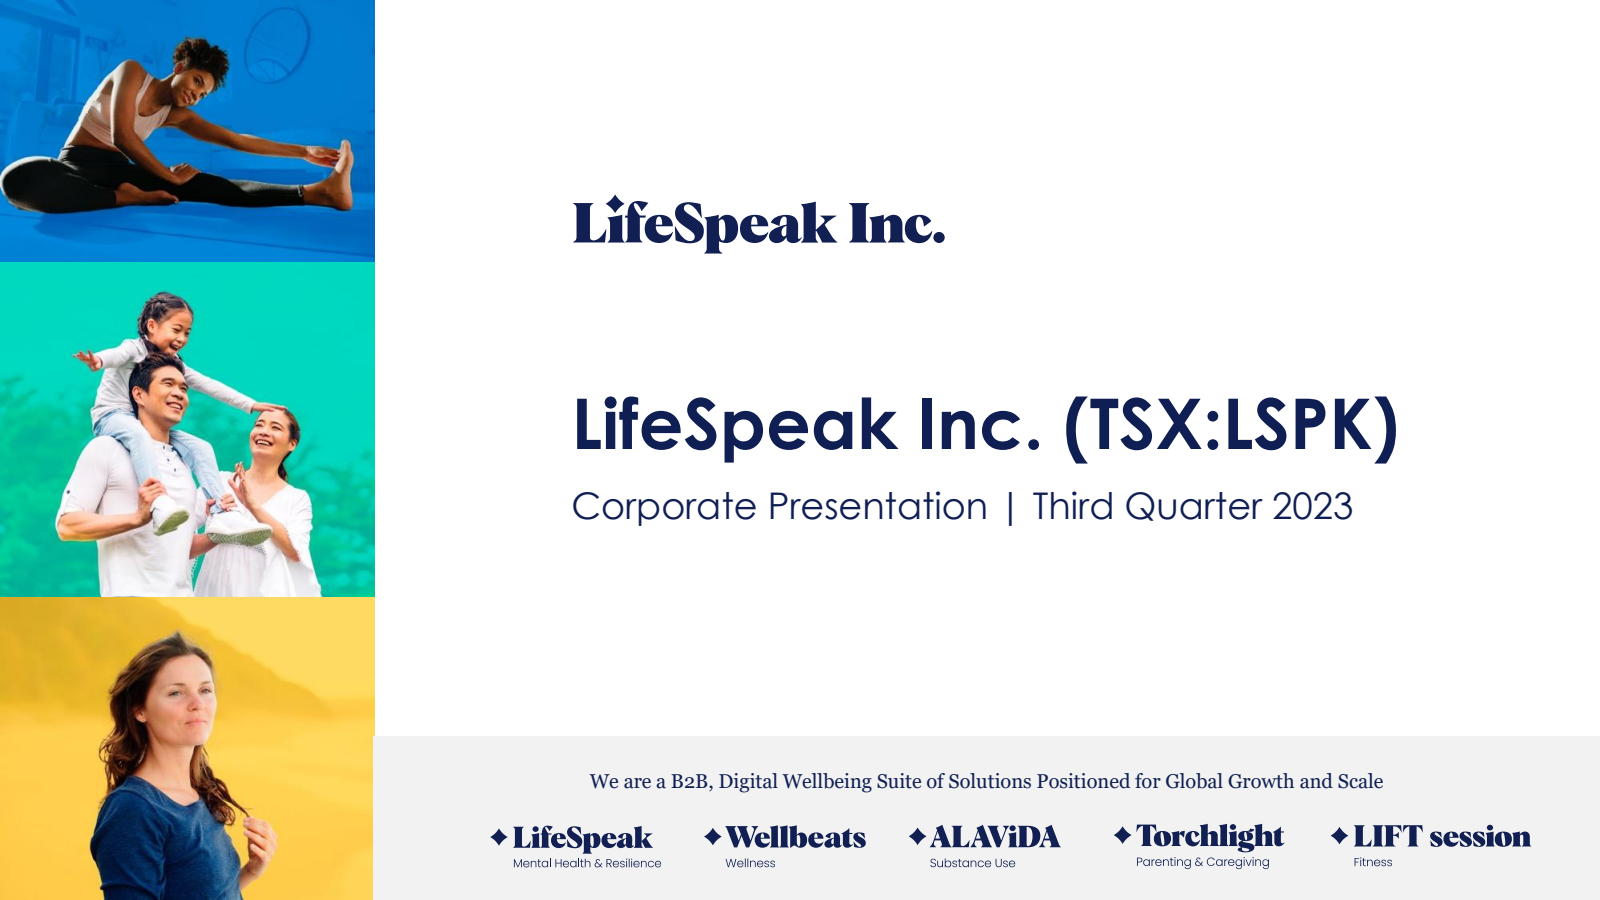 LifeSpeak Inc. 

Lif